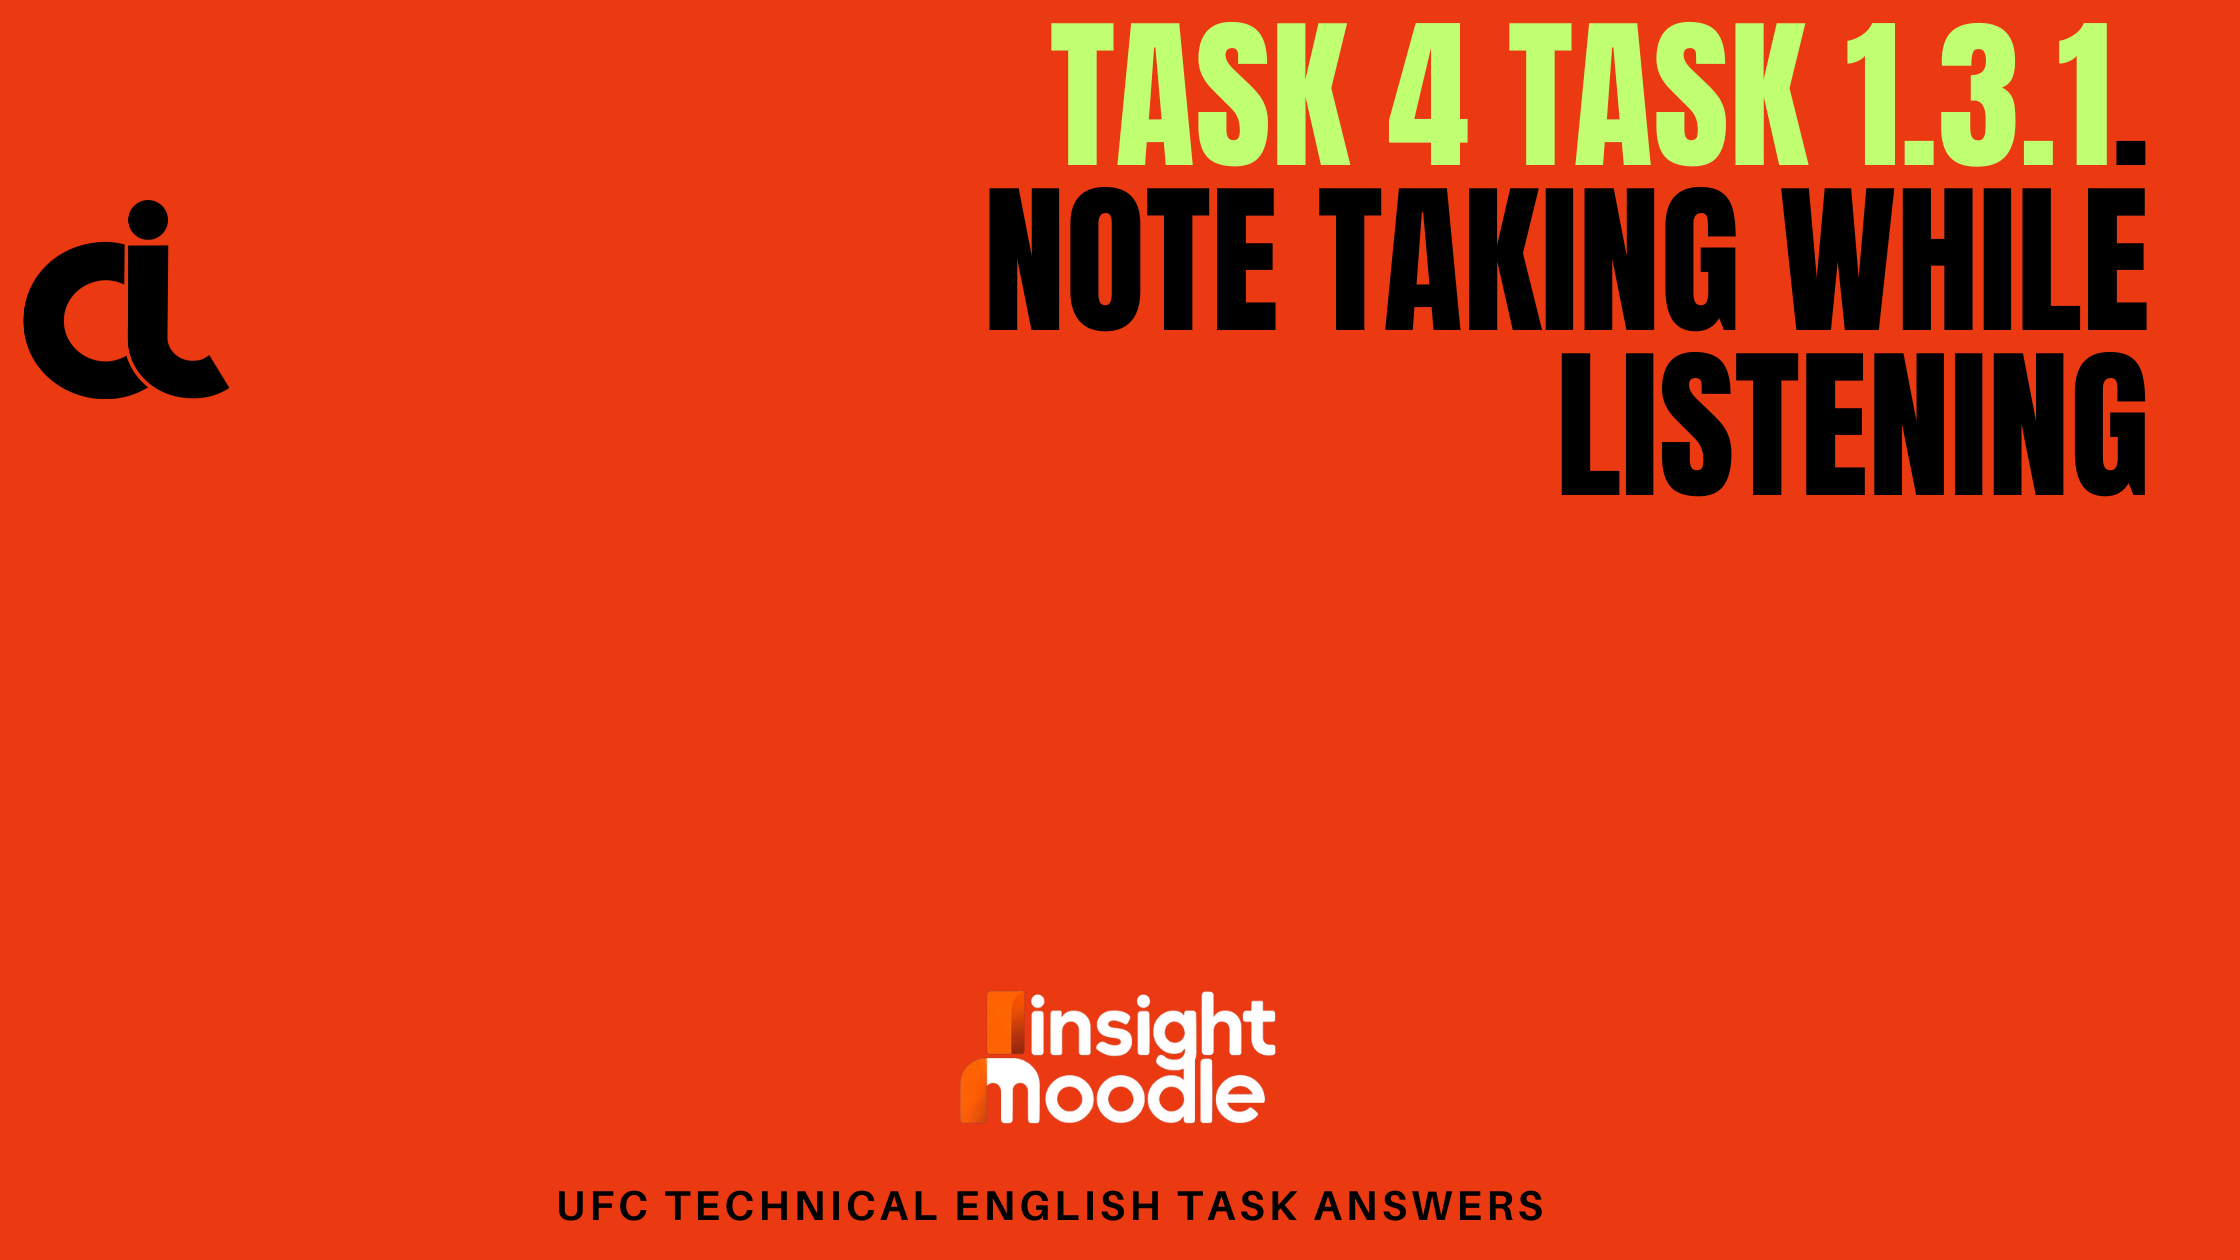 study skills task 4 Task 1.3.1. Note taking while listening/UFC